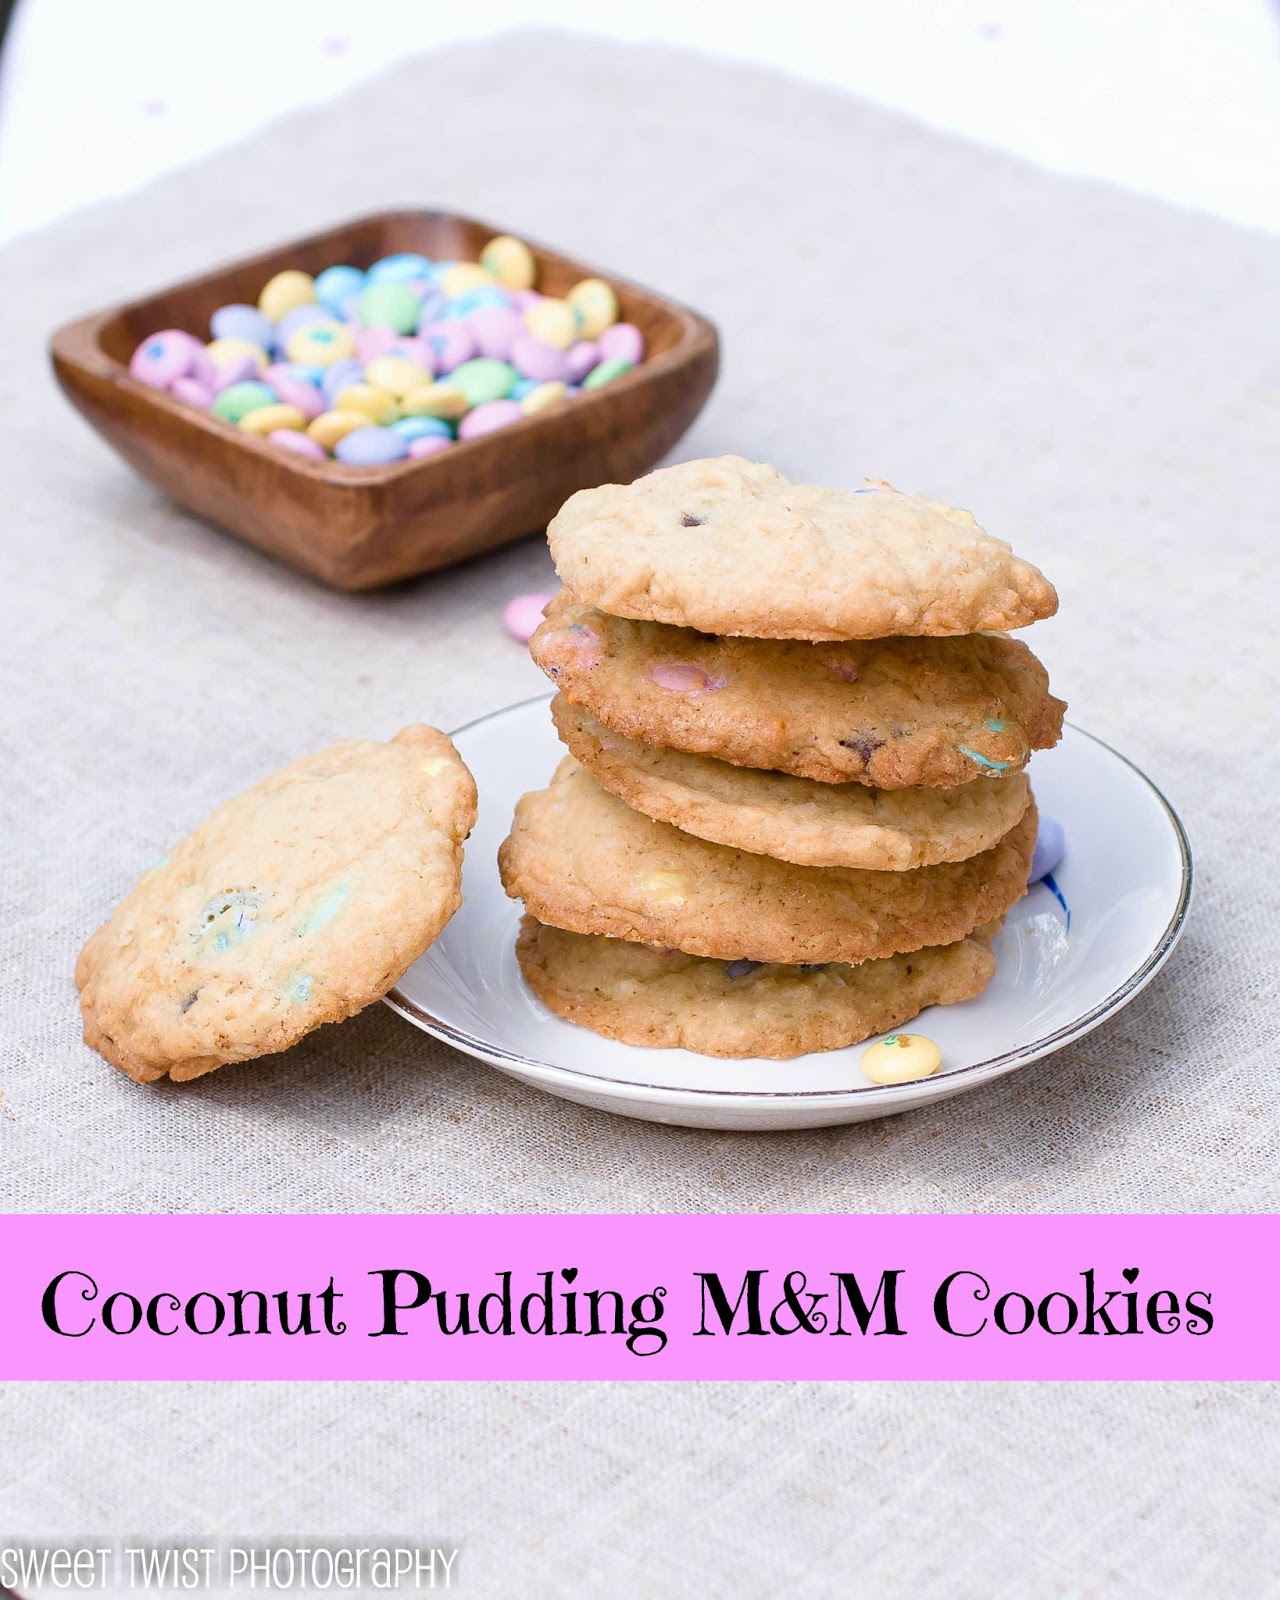 Melissa's Cuisine: Coconut Pudding M&M Cookies